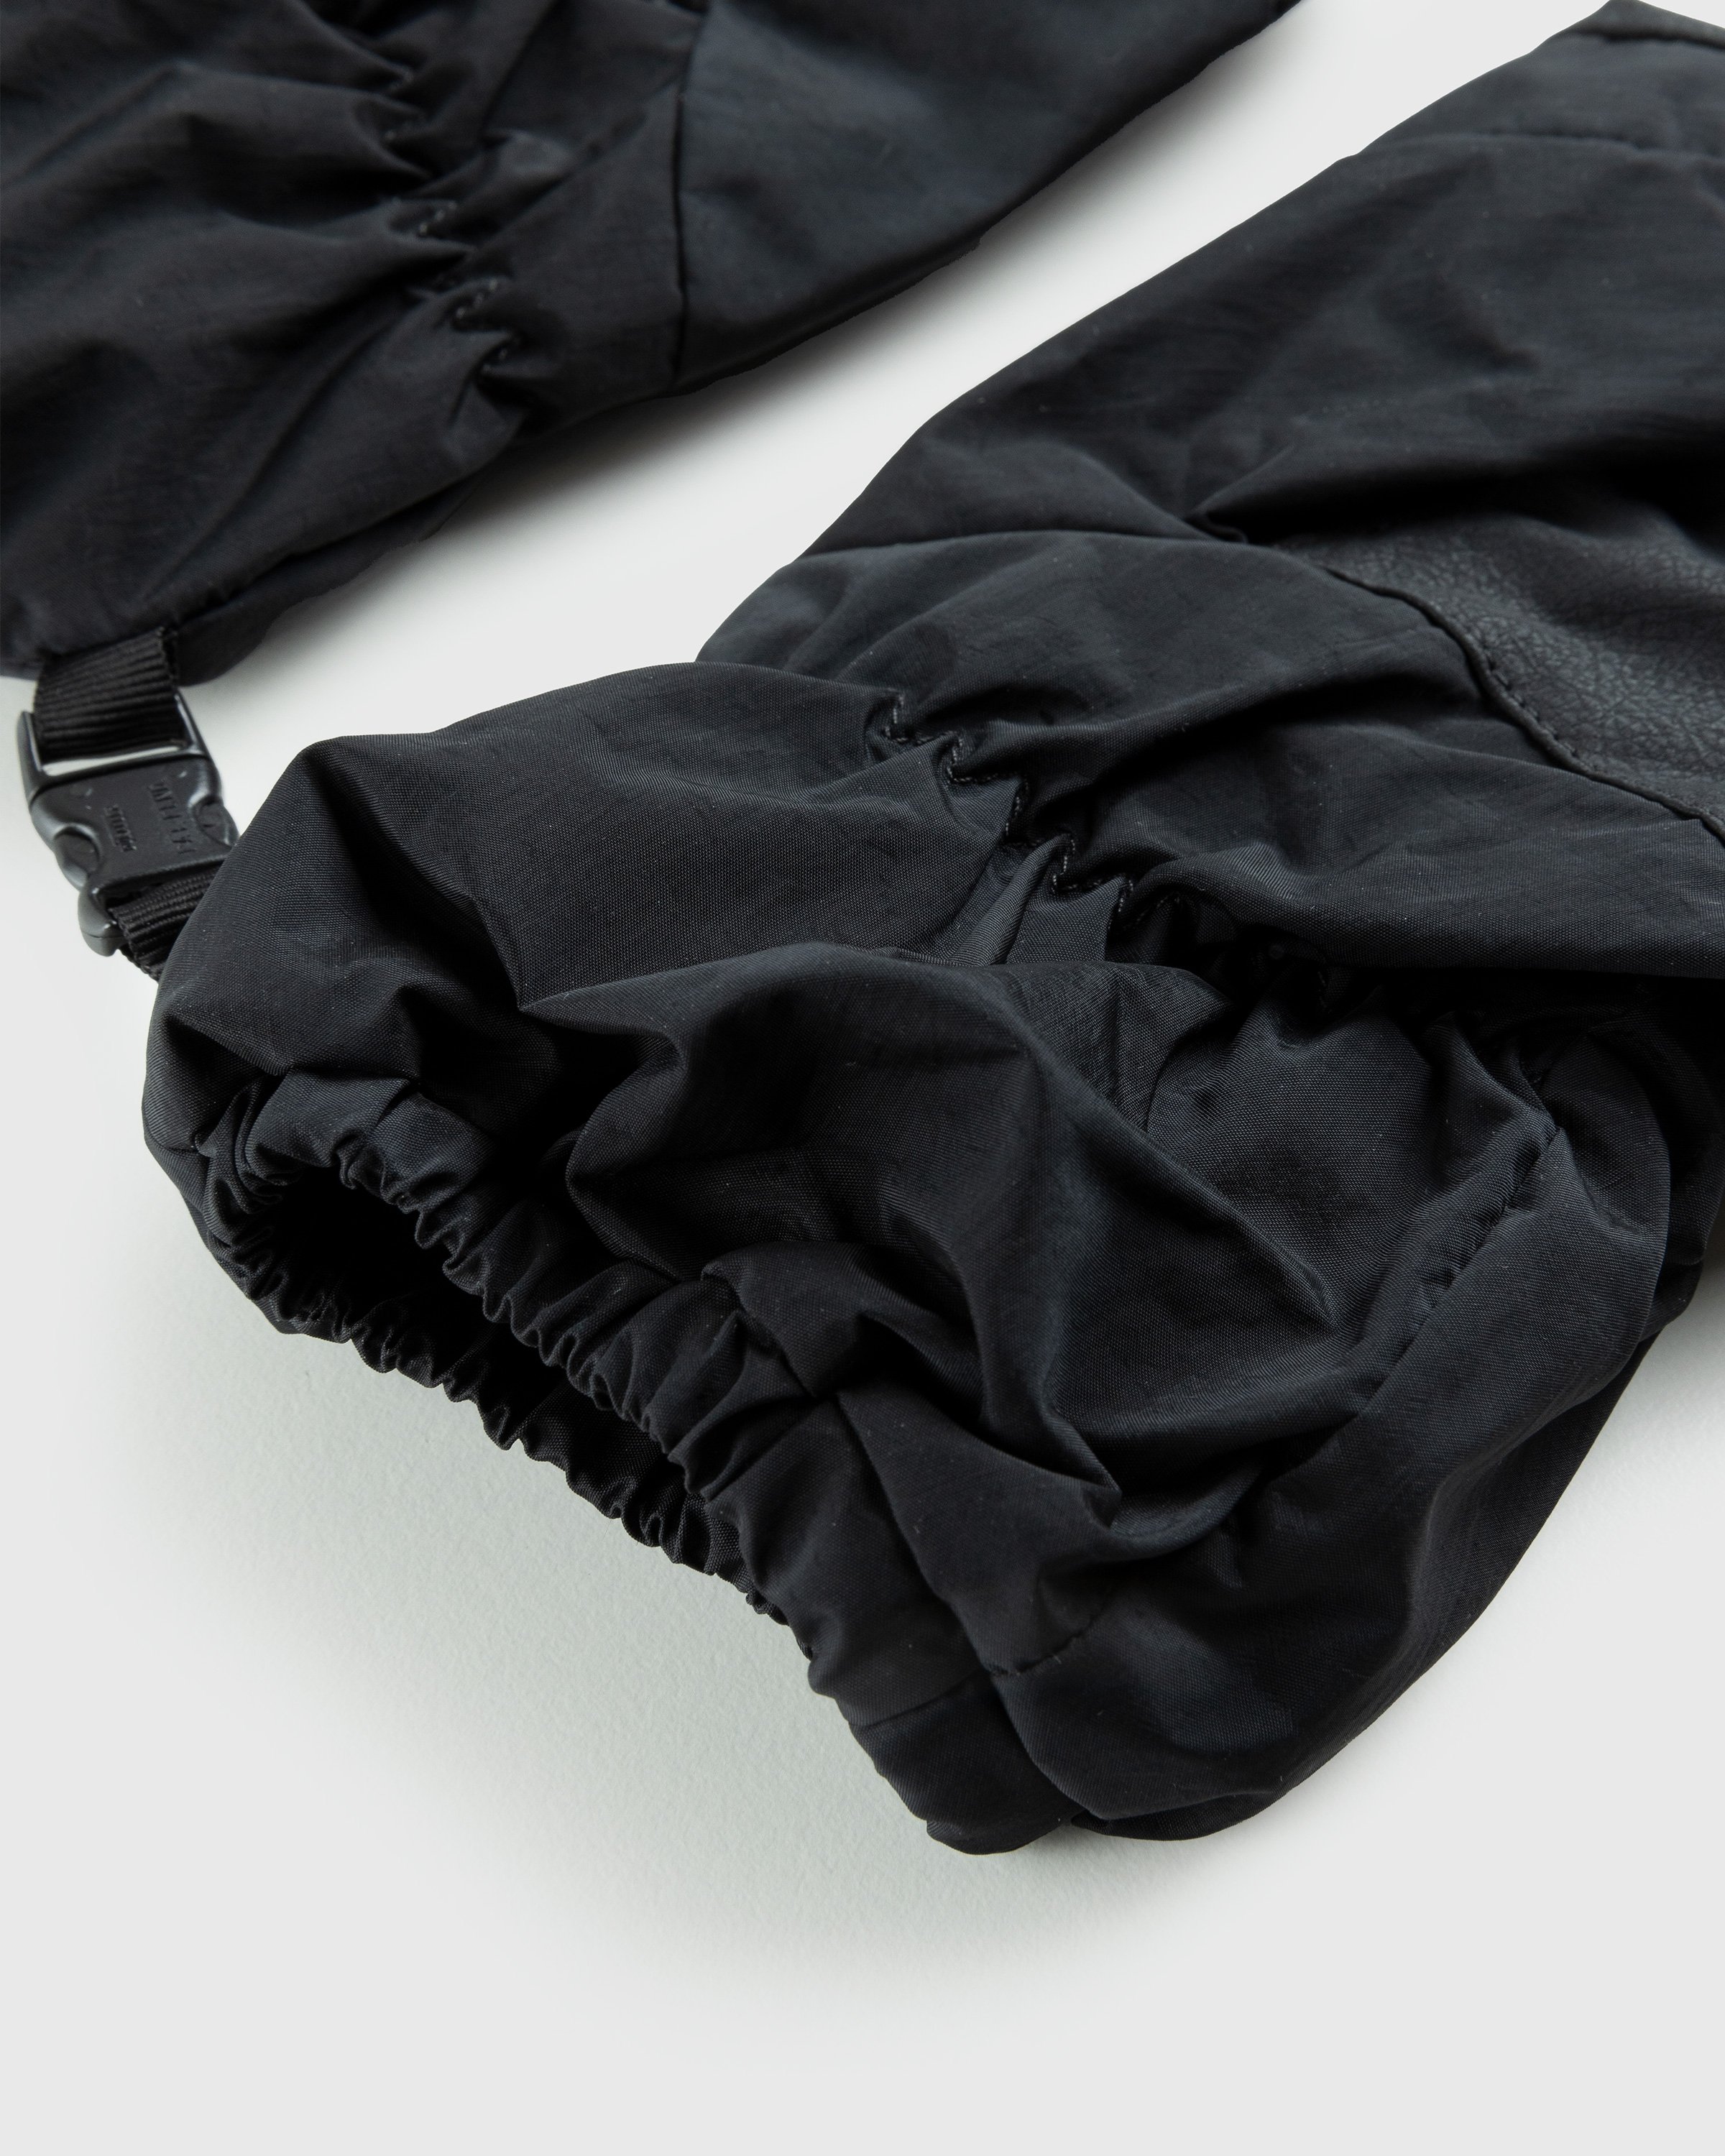 Stone Island - Nylon Metal Gloves Black - Accessories - Black - Image 3